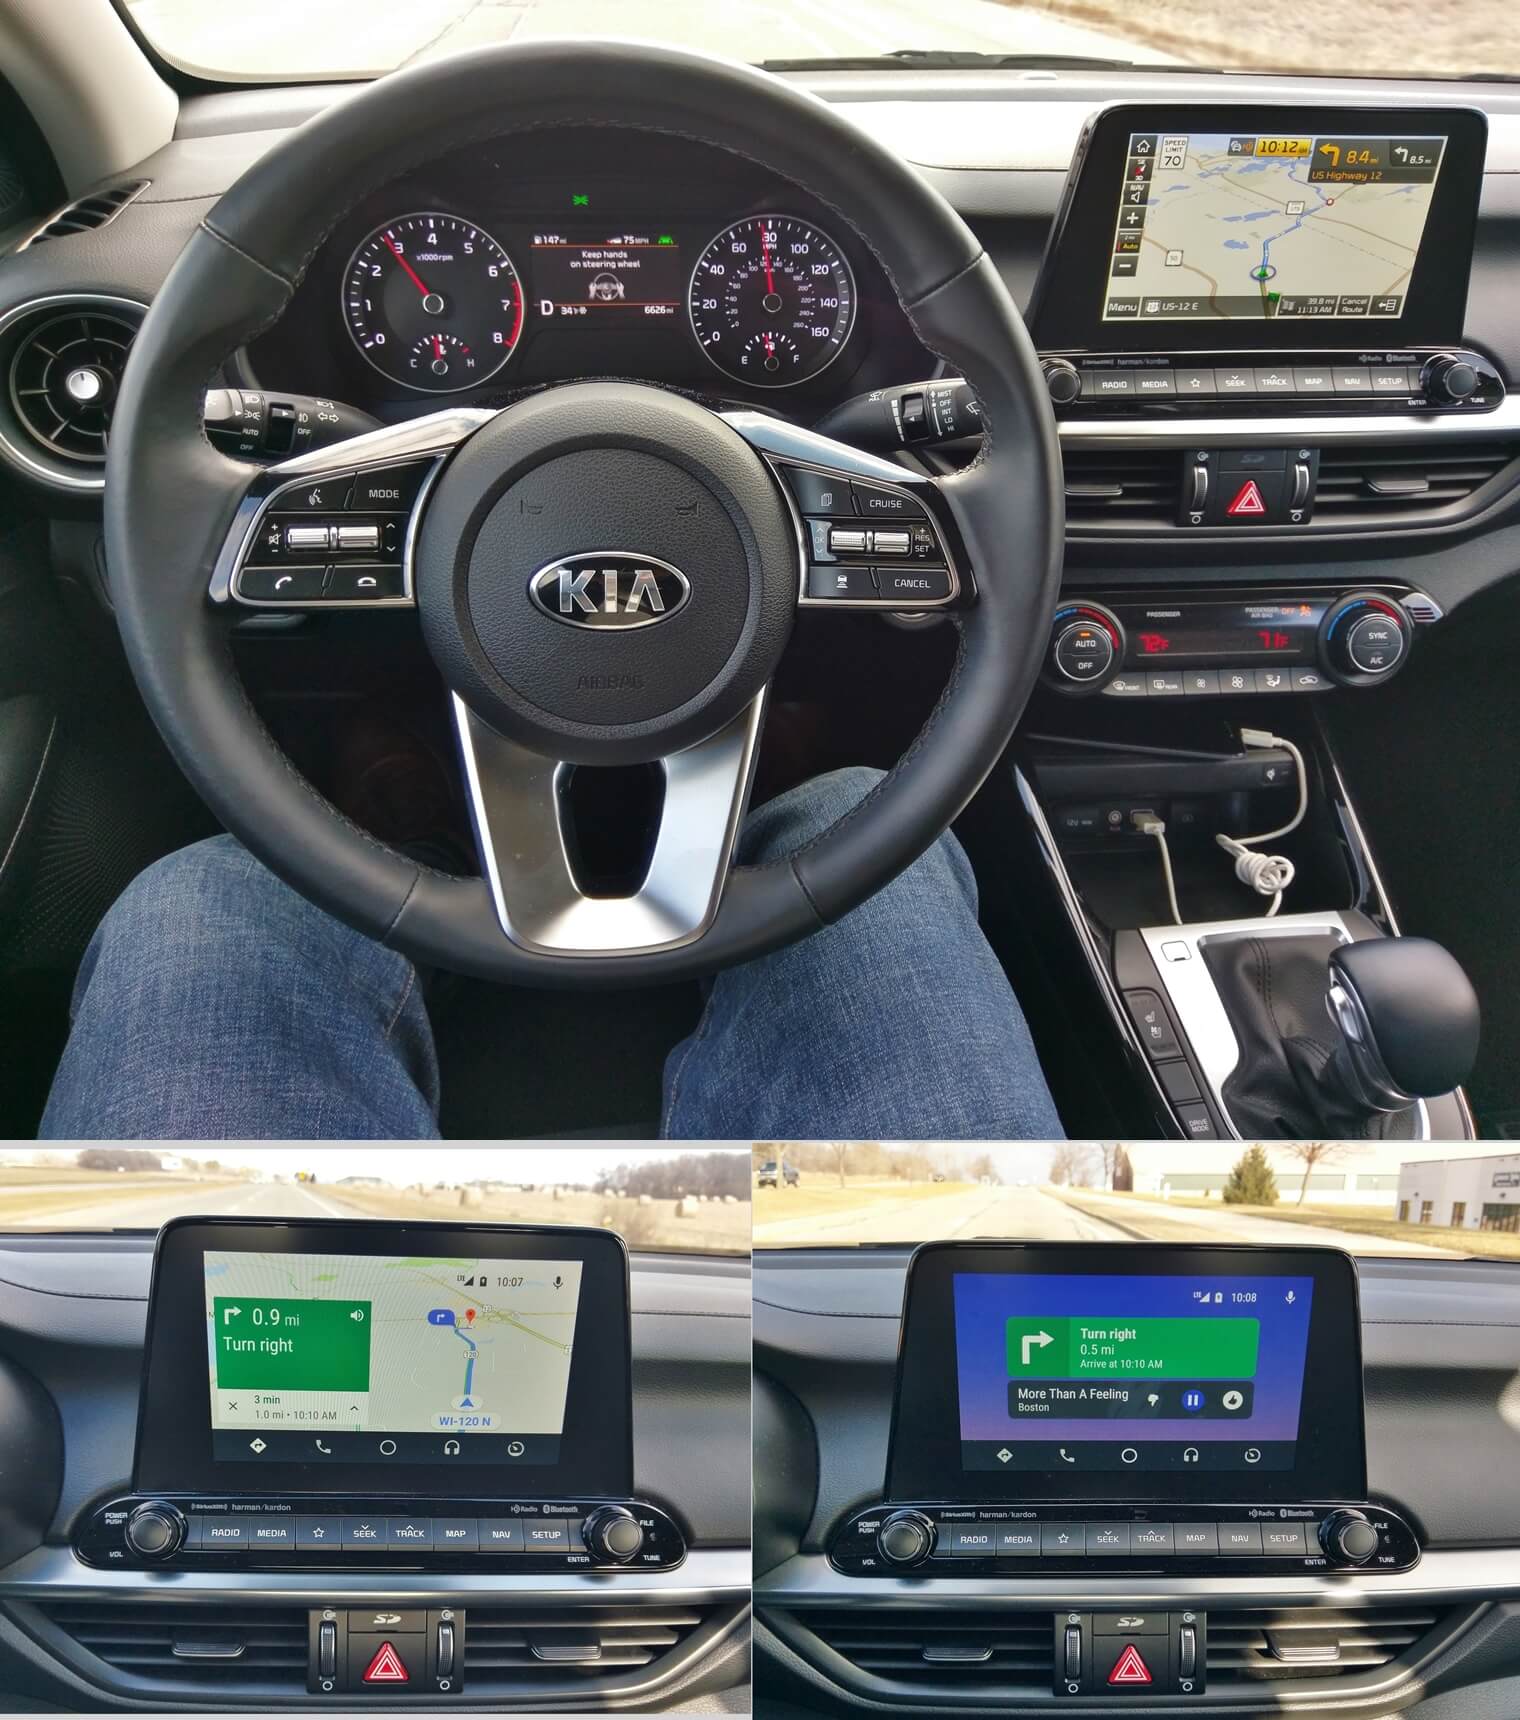 2019 Kia Forte EX: native GPS HDD navigation vs. Android Auto Google Maps navigation